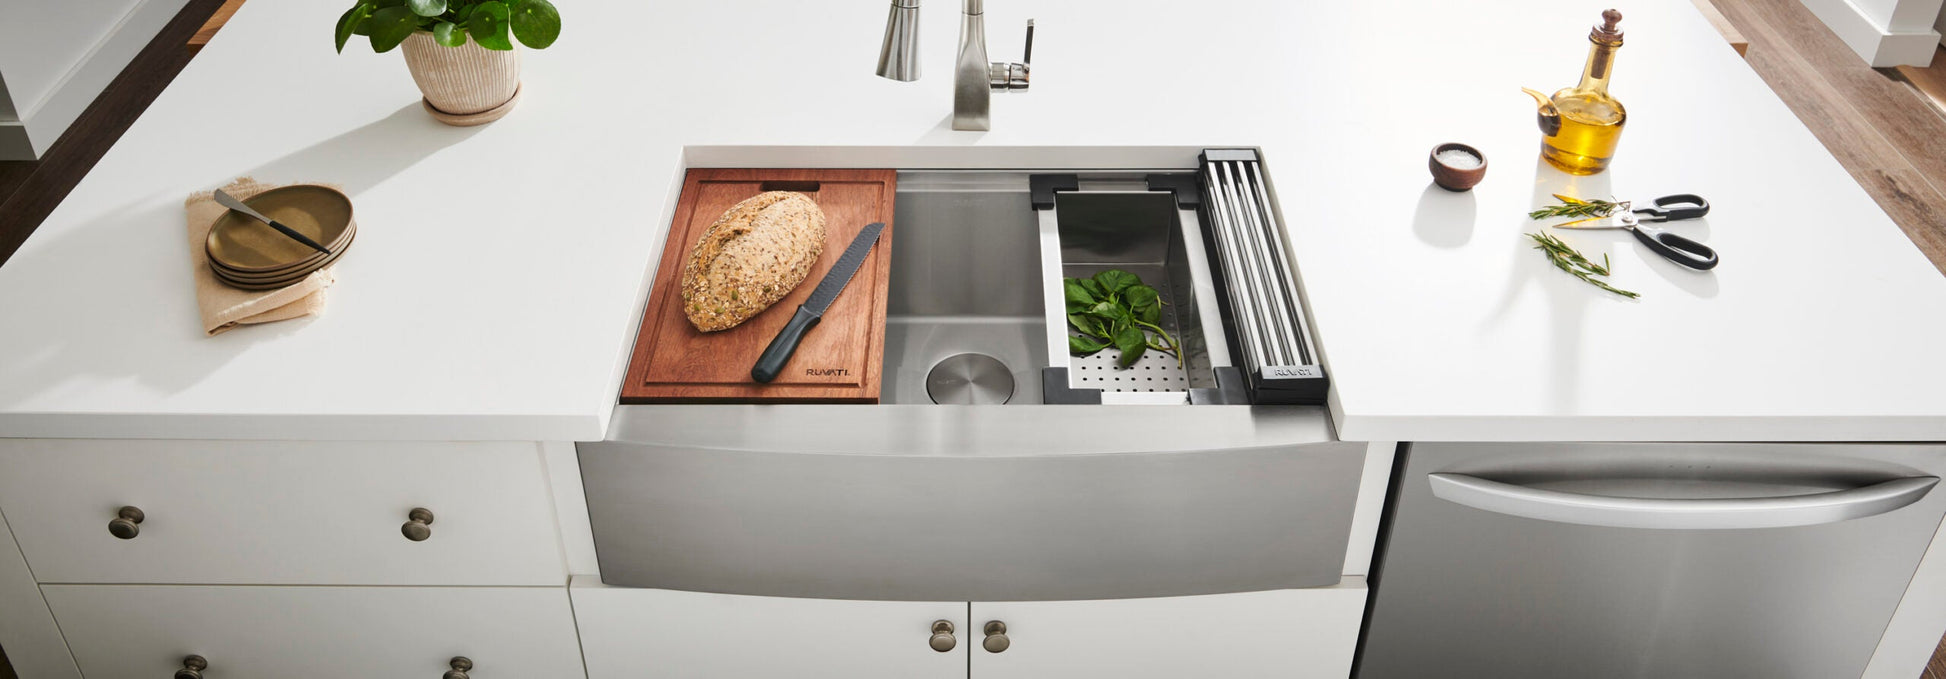 Ruvati Verona 36" Stainless Steel Single Bowl Apron-Front Workstation Farmhouse Kitchen Sink